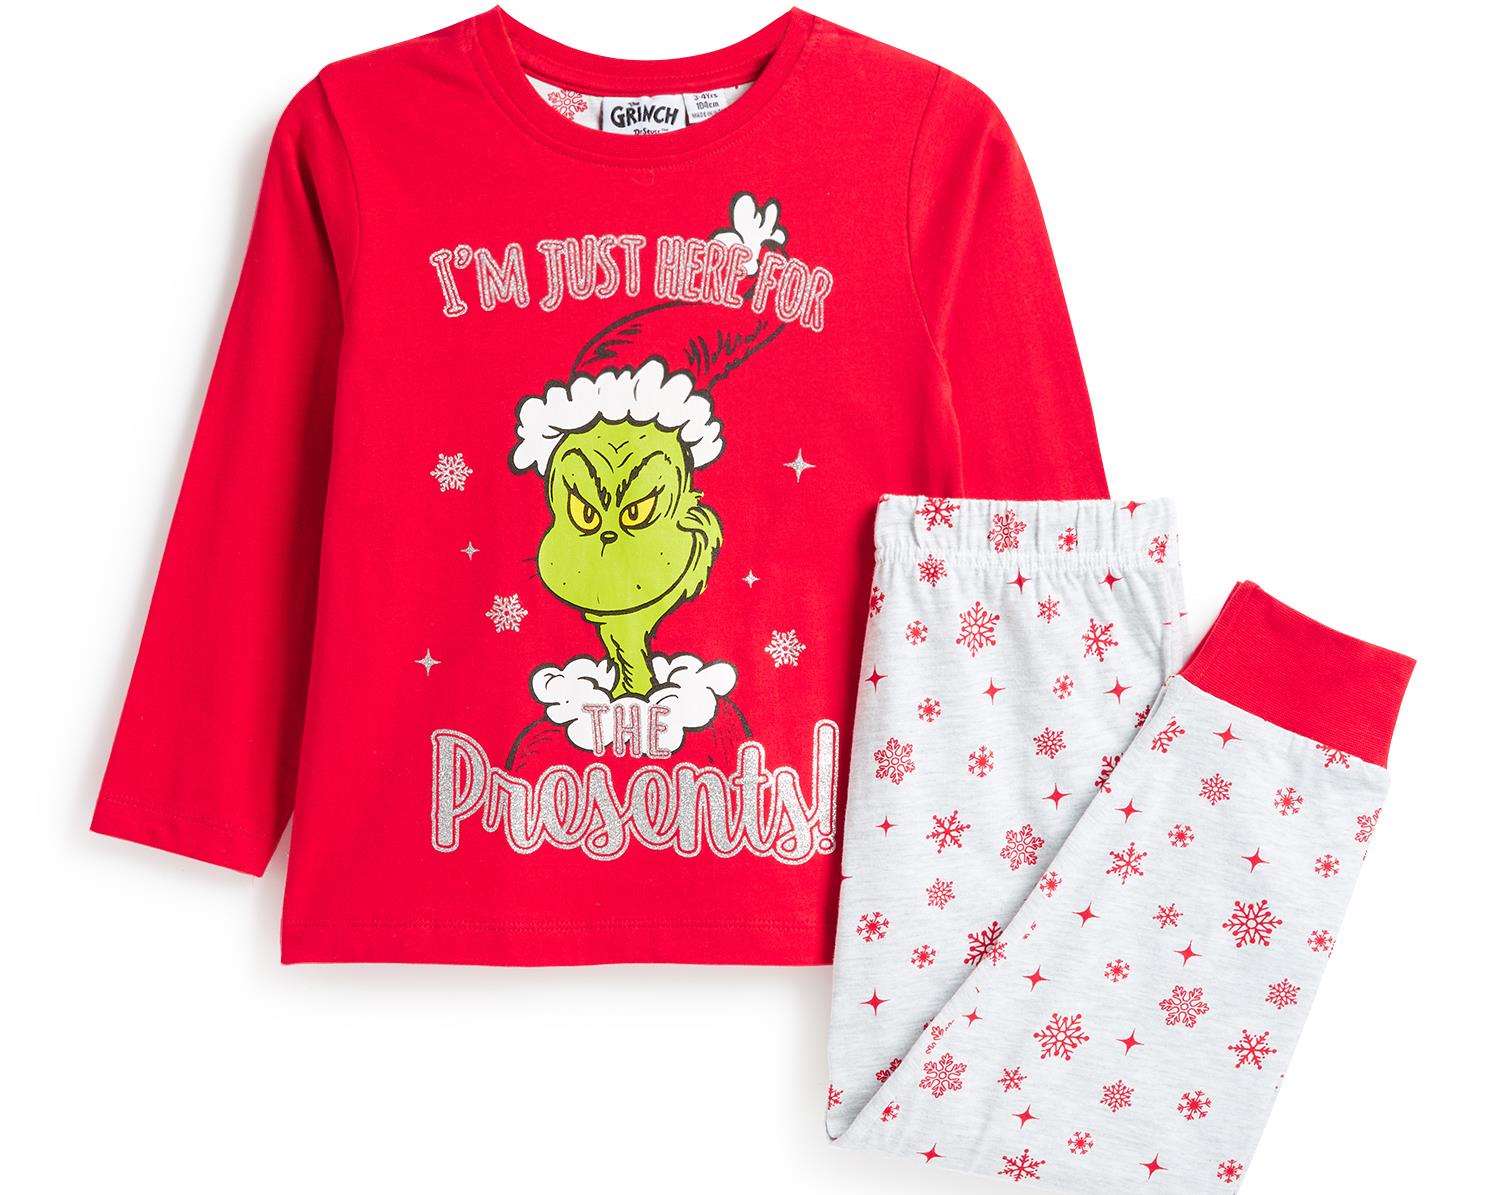 Children's pyjama set from Primark, from £7.